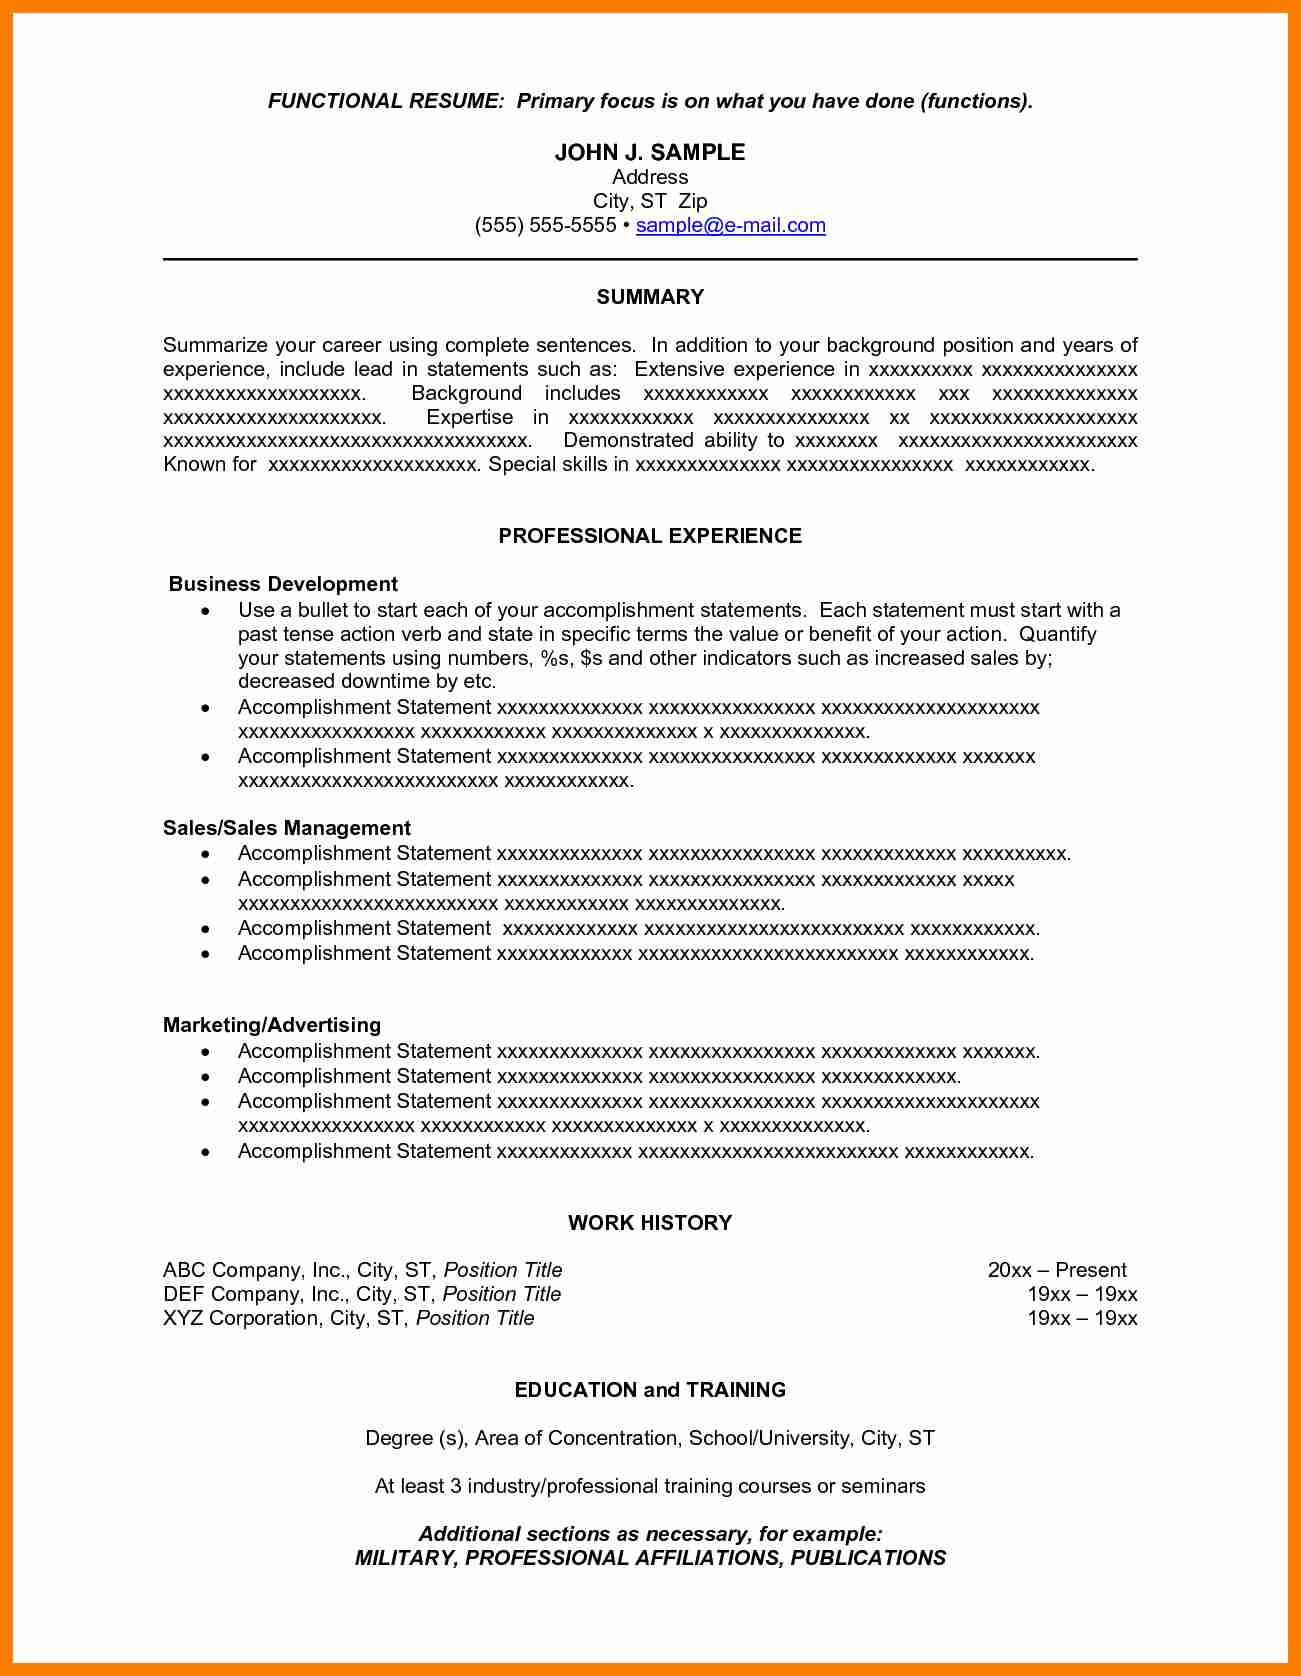 Resume Summary Statement 10 Resume Summary Statement Activo Holidays Resume Statements